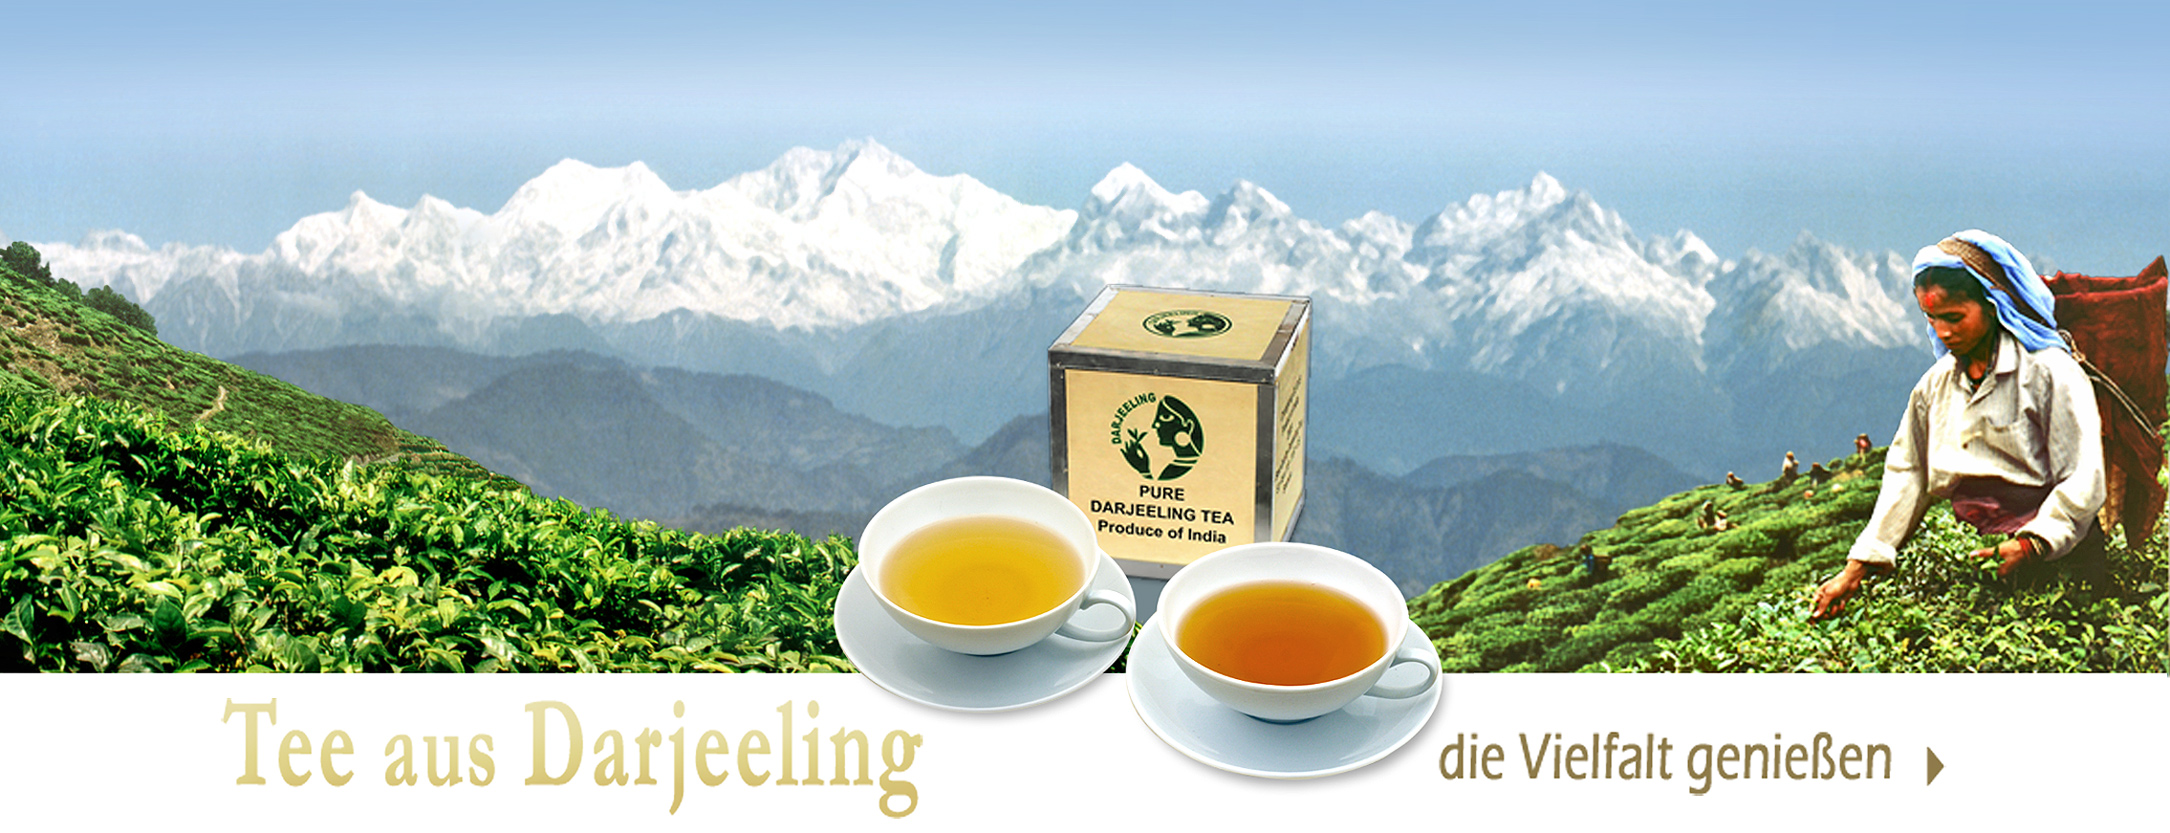 banner Darjeeling-Tee